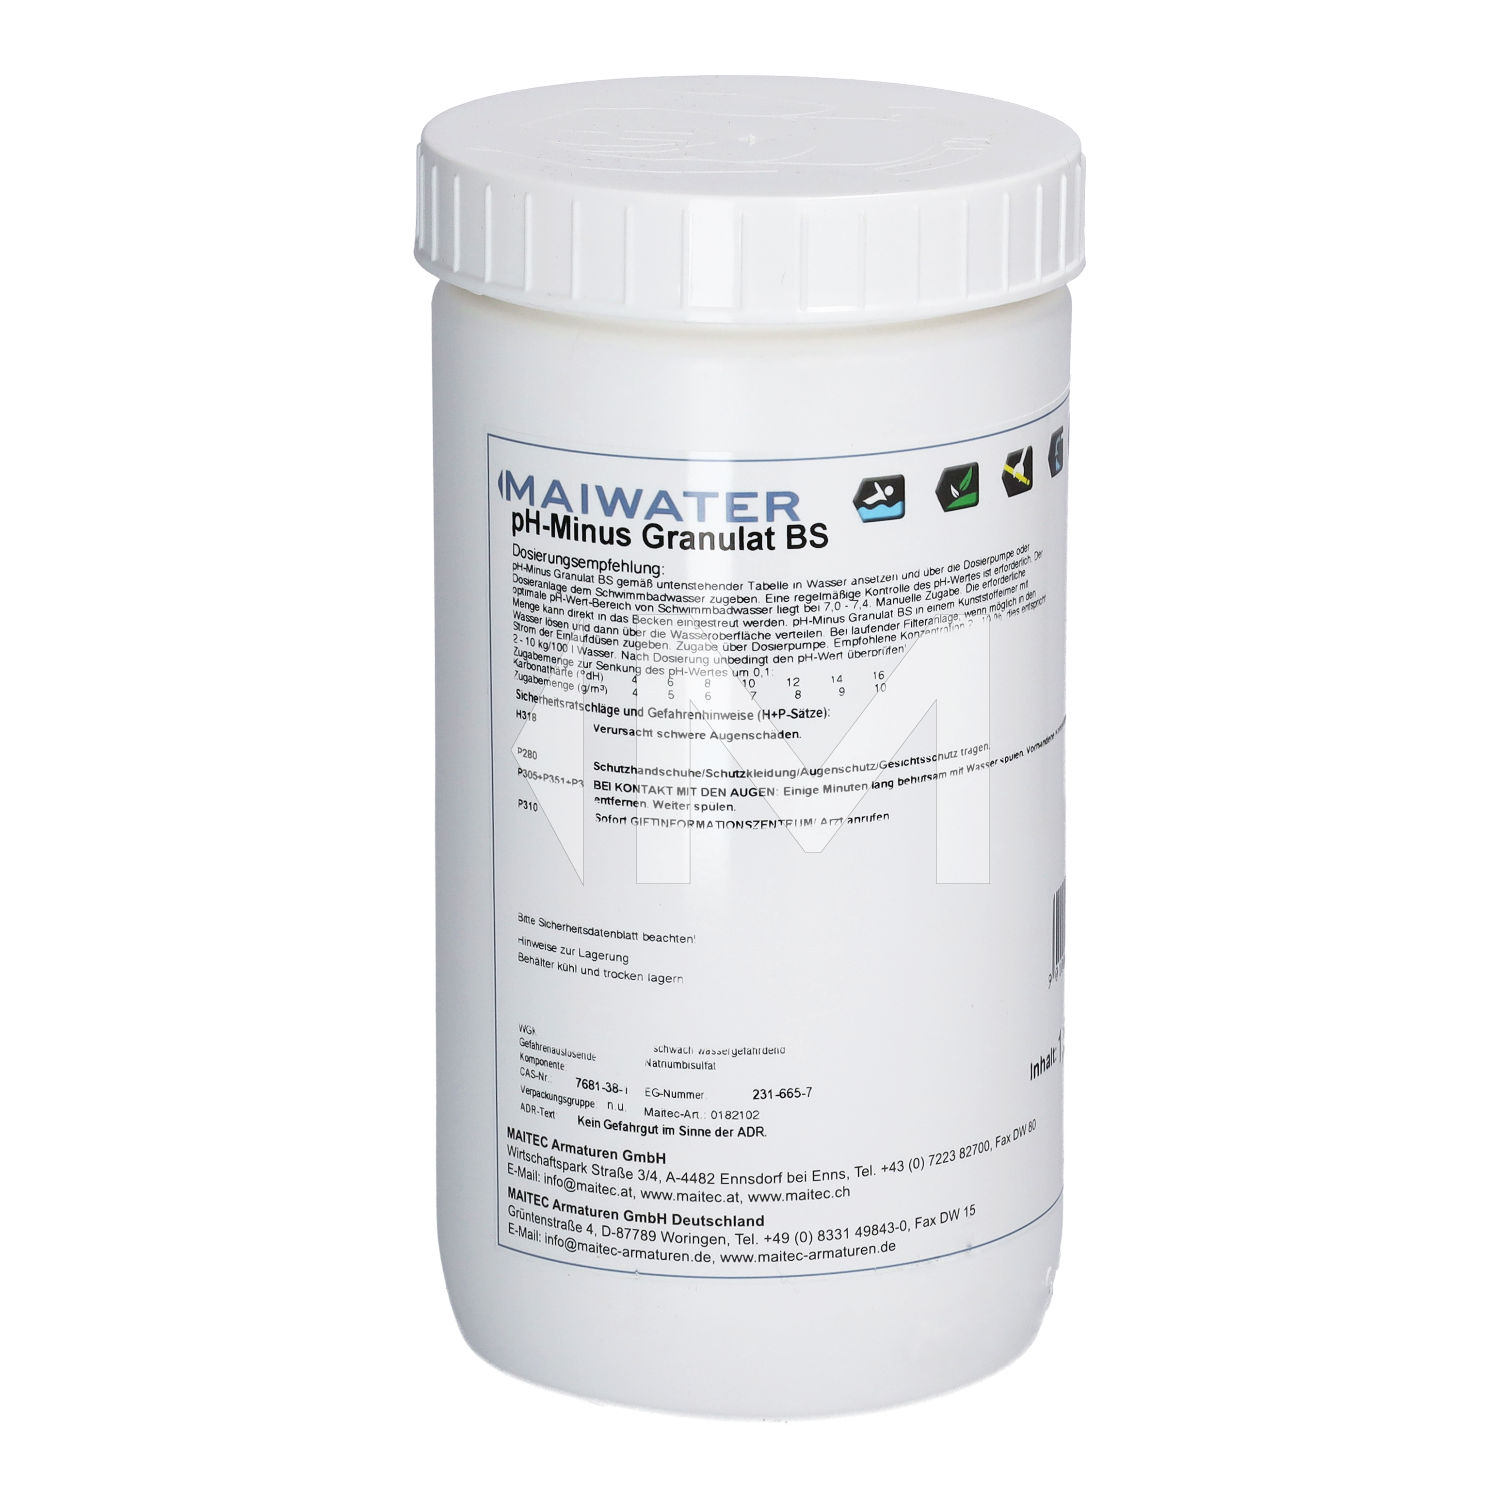 MAIWATER pH-minus Granulat BS